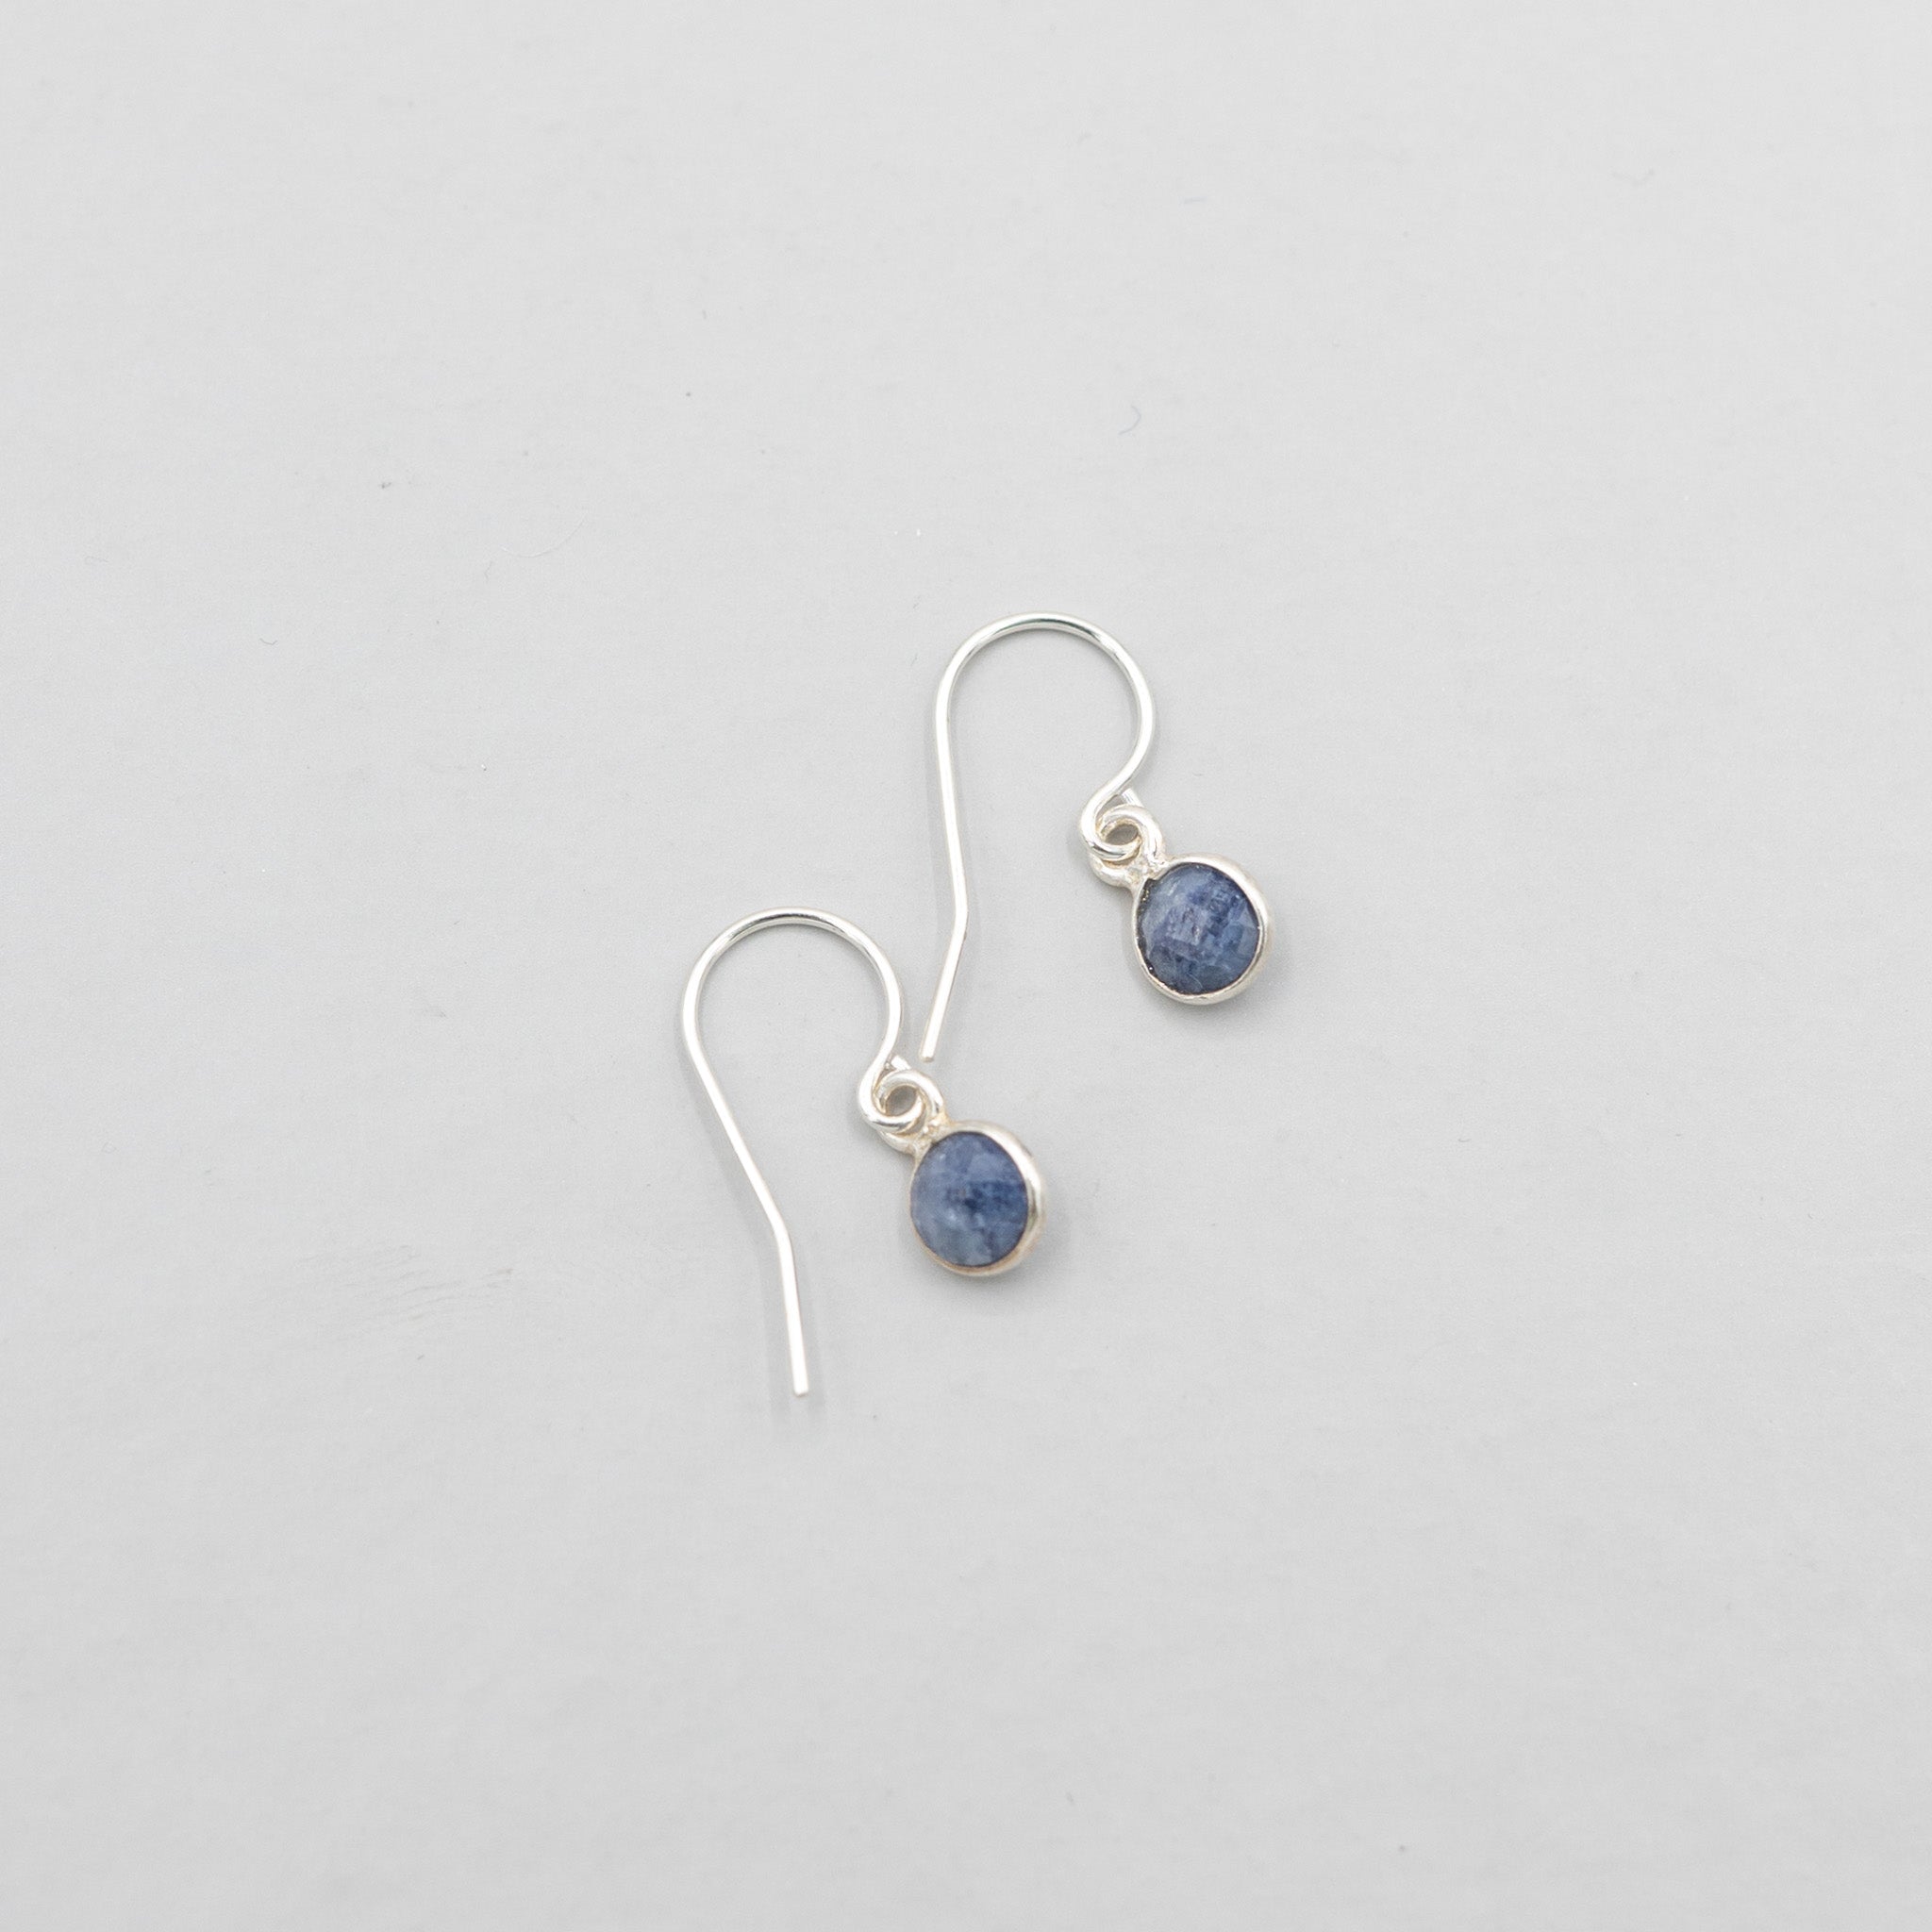 Petite Sapphire Gemstone Earrings - Jewel Ya